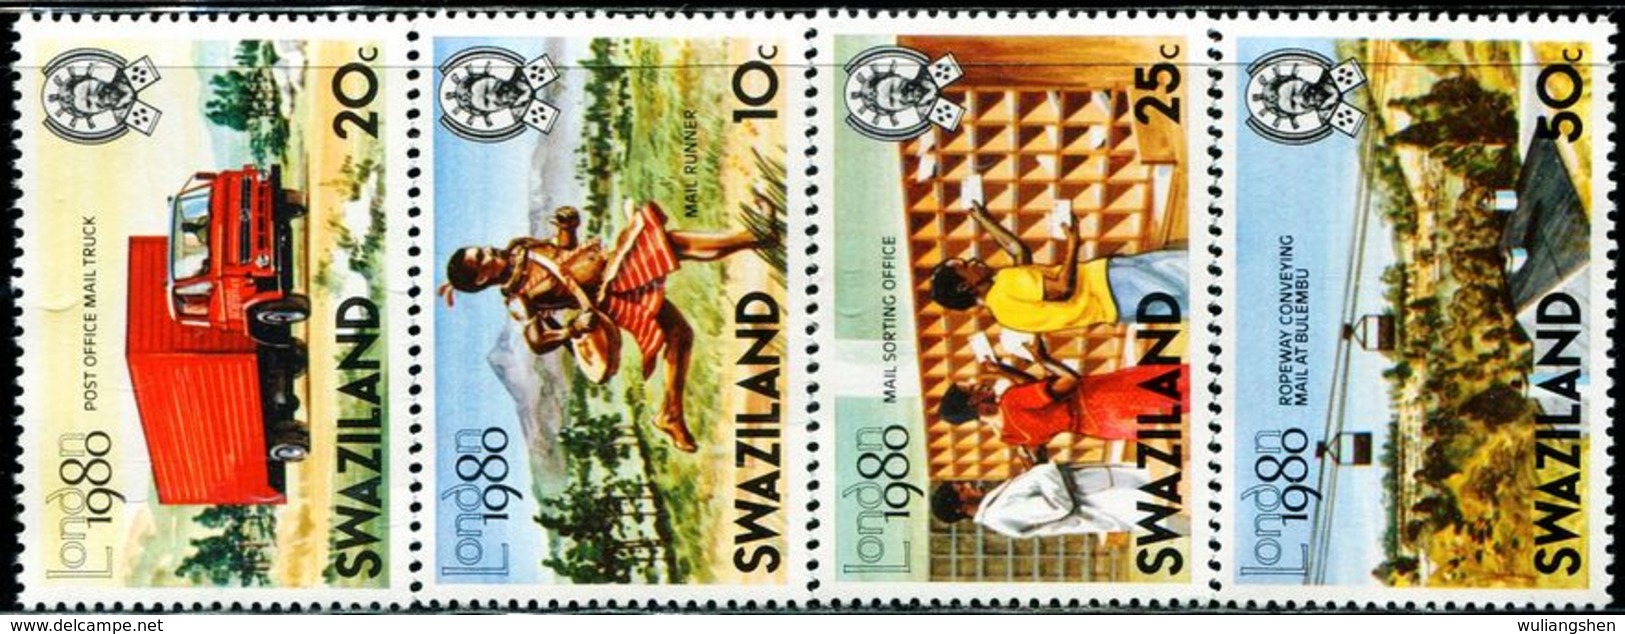 BV0764 Swaziland 1980 Postal Exhibition, Postal Sorting, Etc. 4V MNH - UPU (Unión Postal Universal)